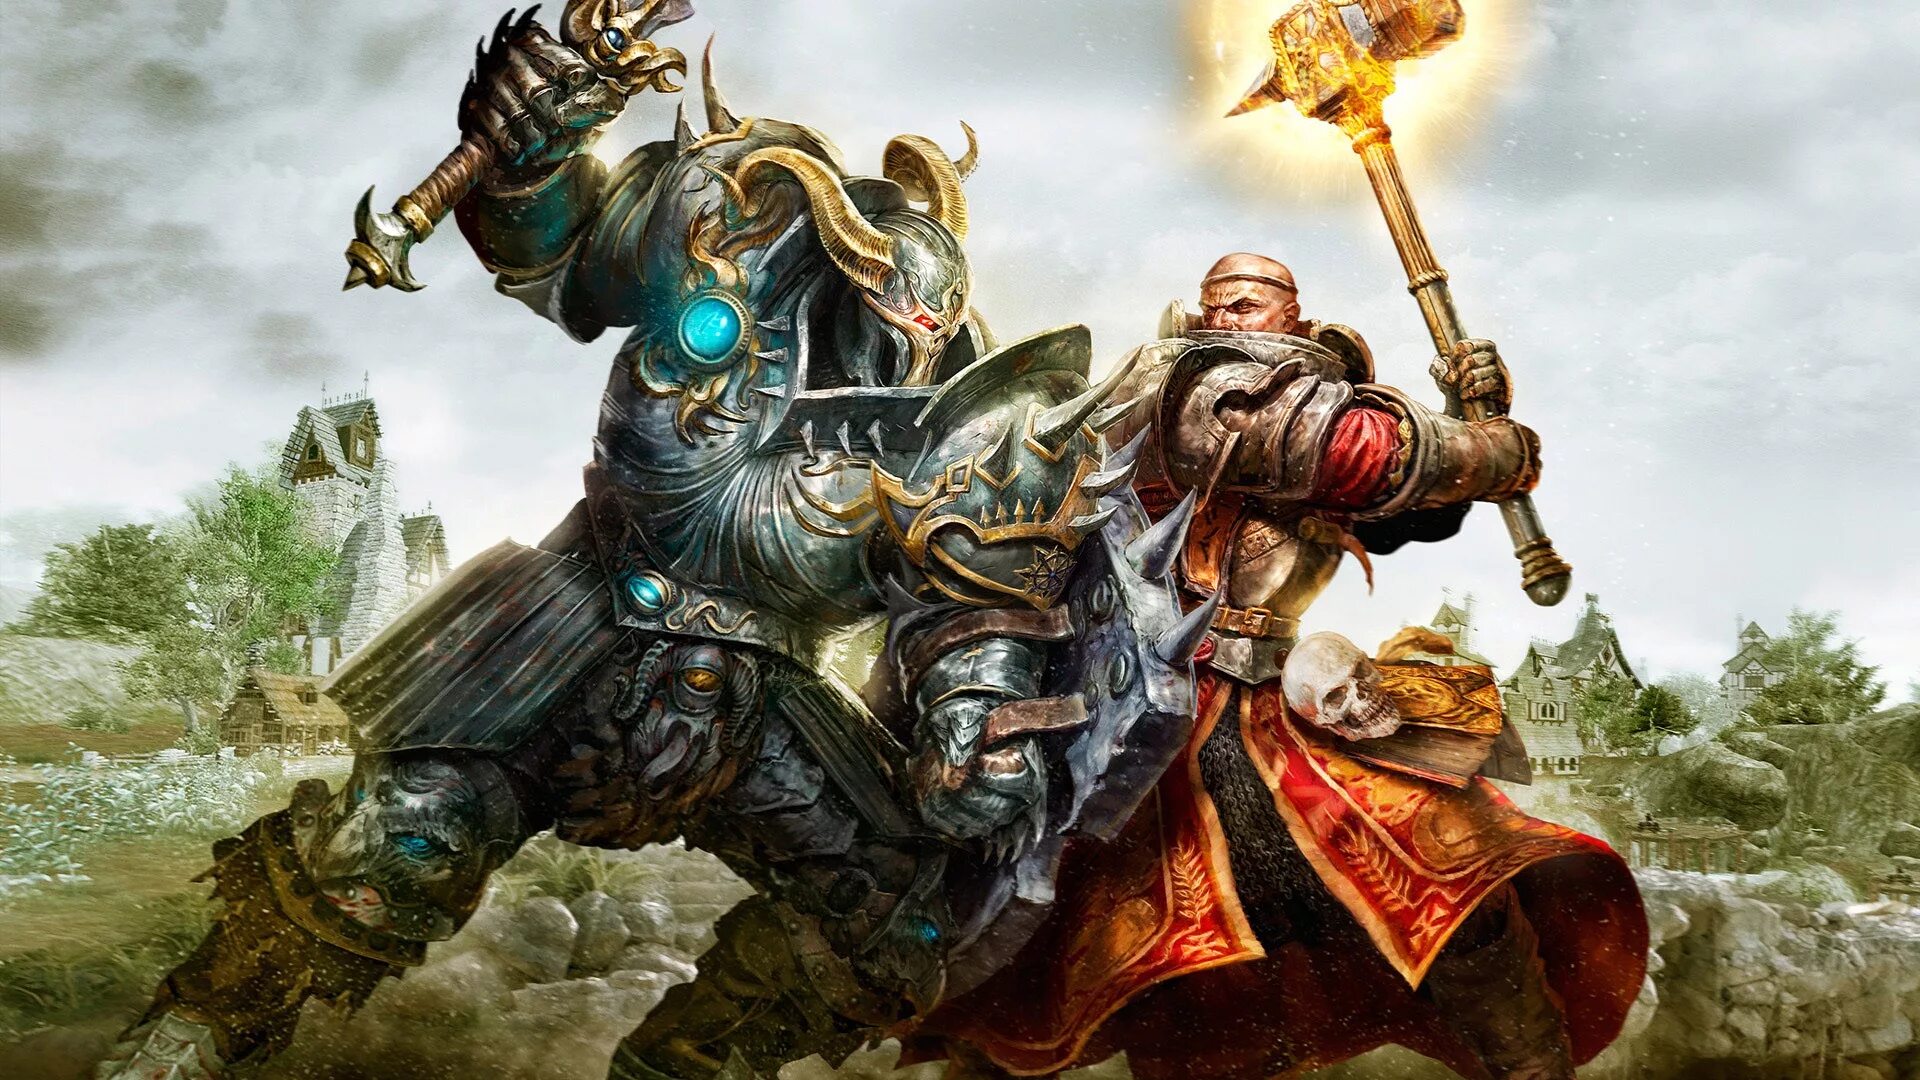 Warhammer: Mark of Chaos – Battle March. Инквизитор вархаммер фэнтези. Вархаммер фэнтези батл. Инквизитор вархаммер Fantasy Battle. Without age